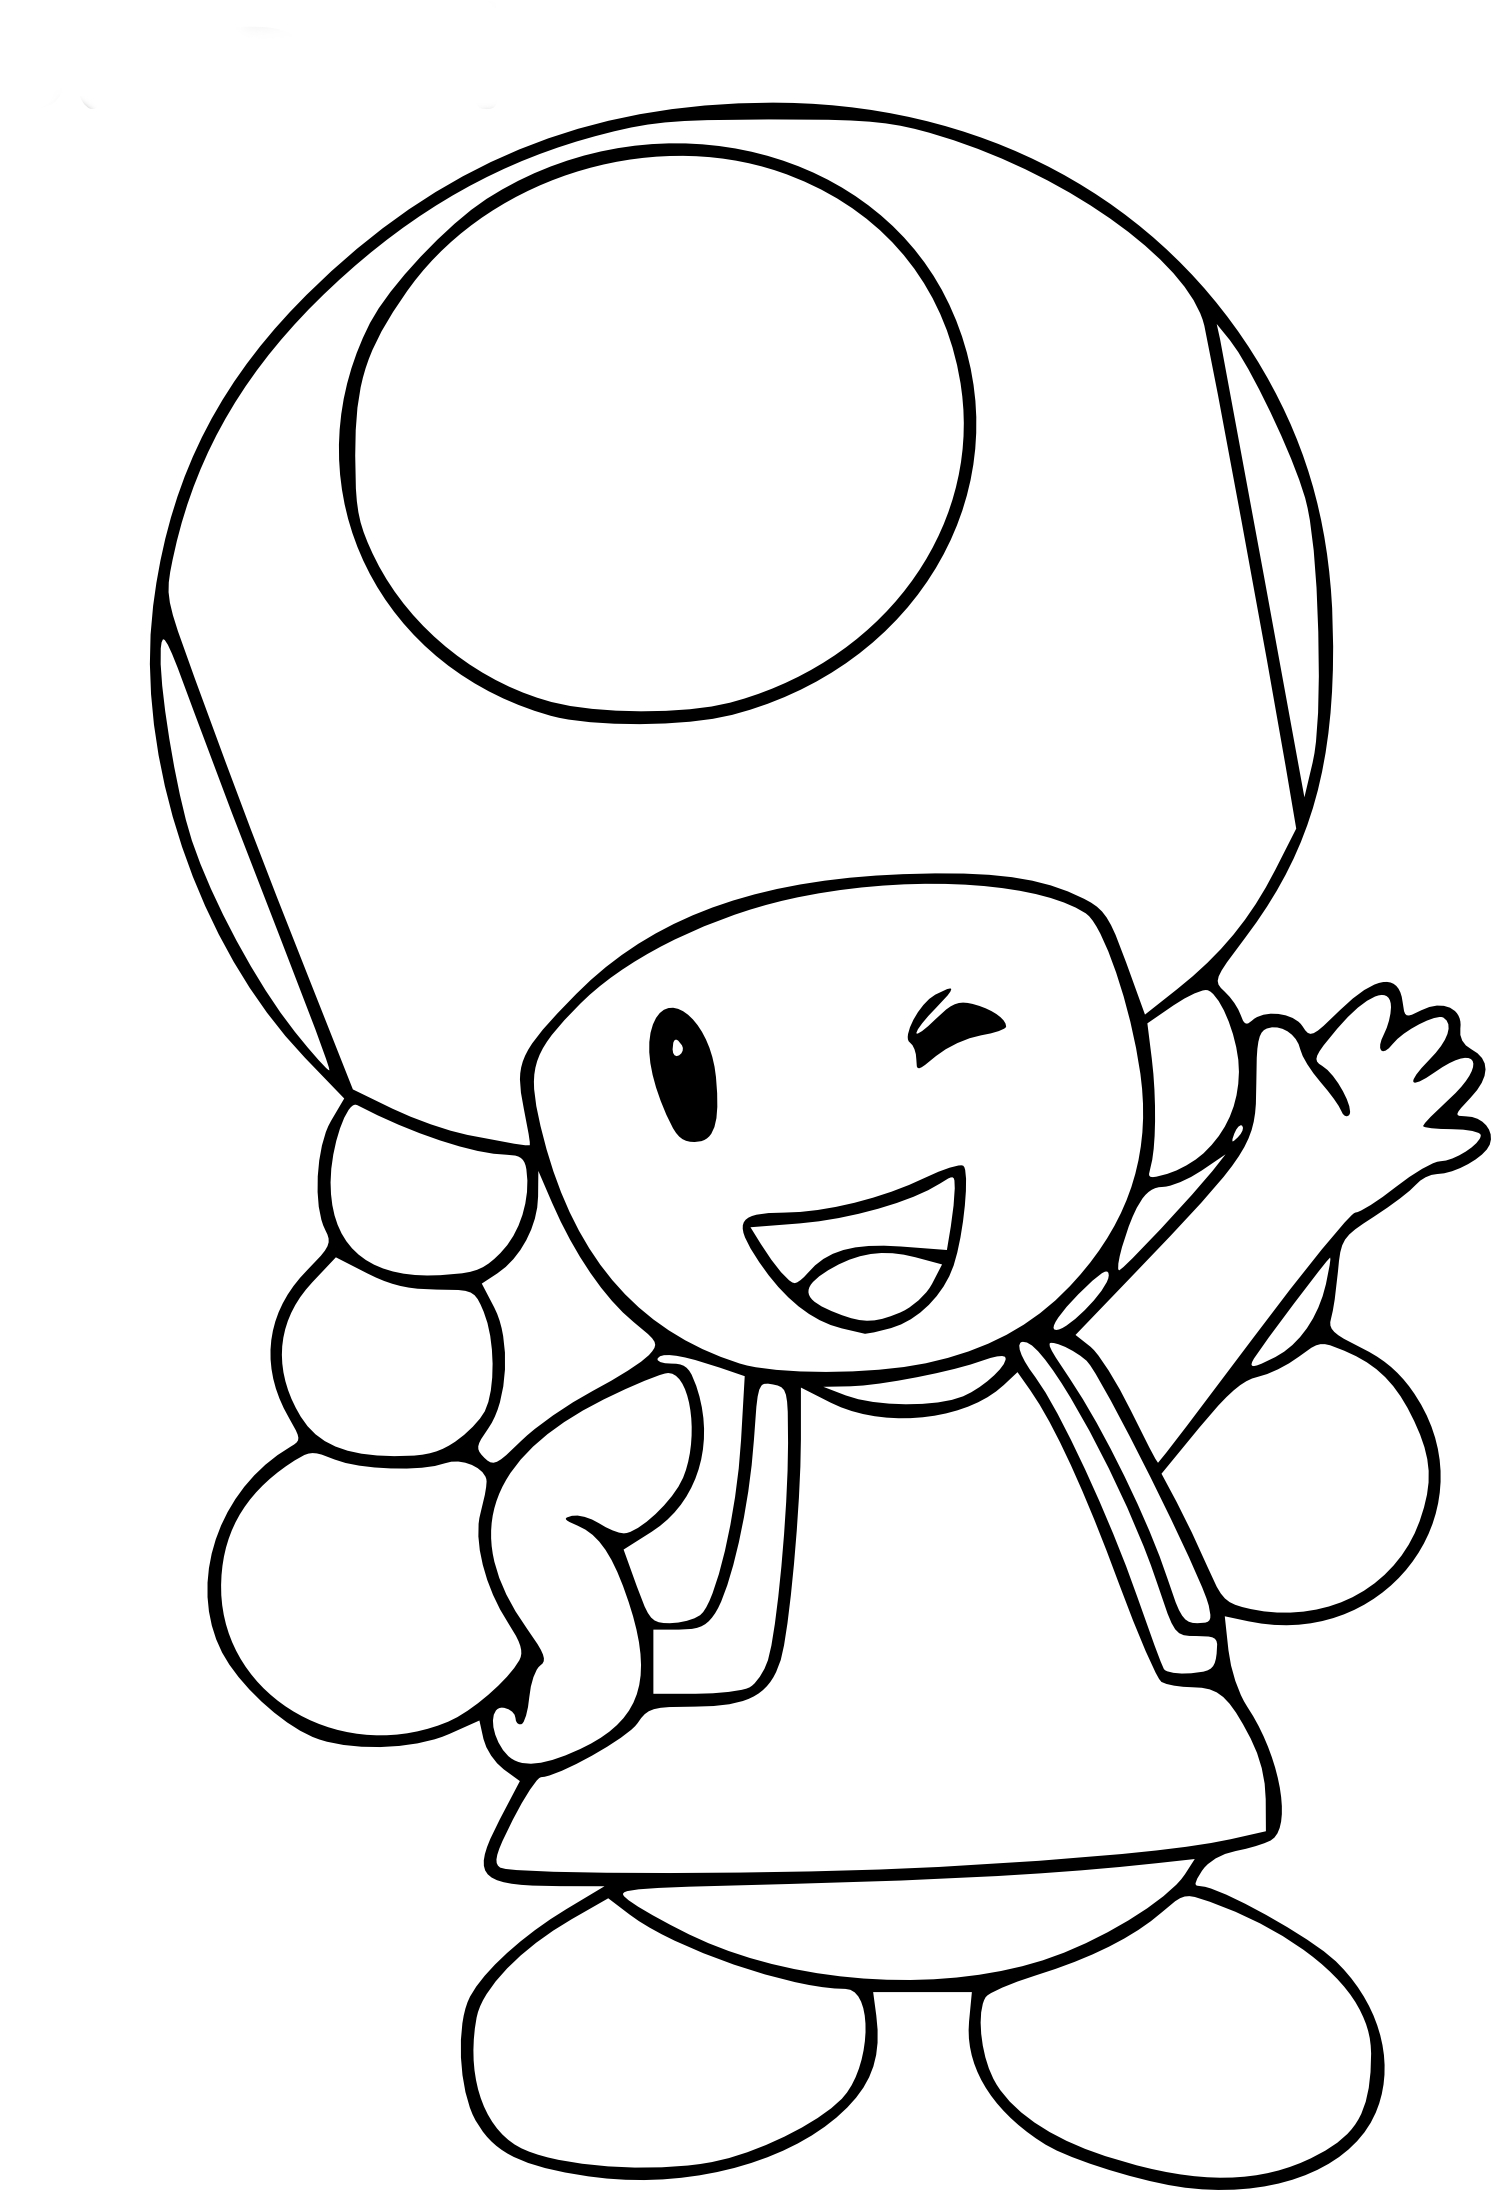 Toadette Mario coloring page